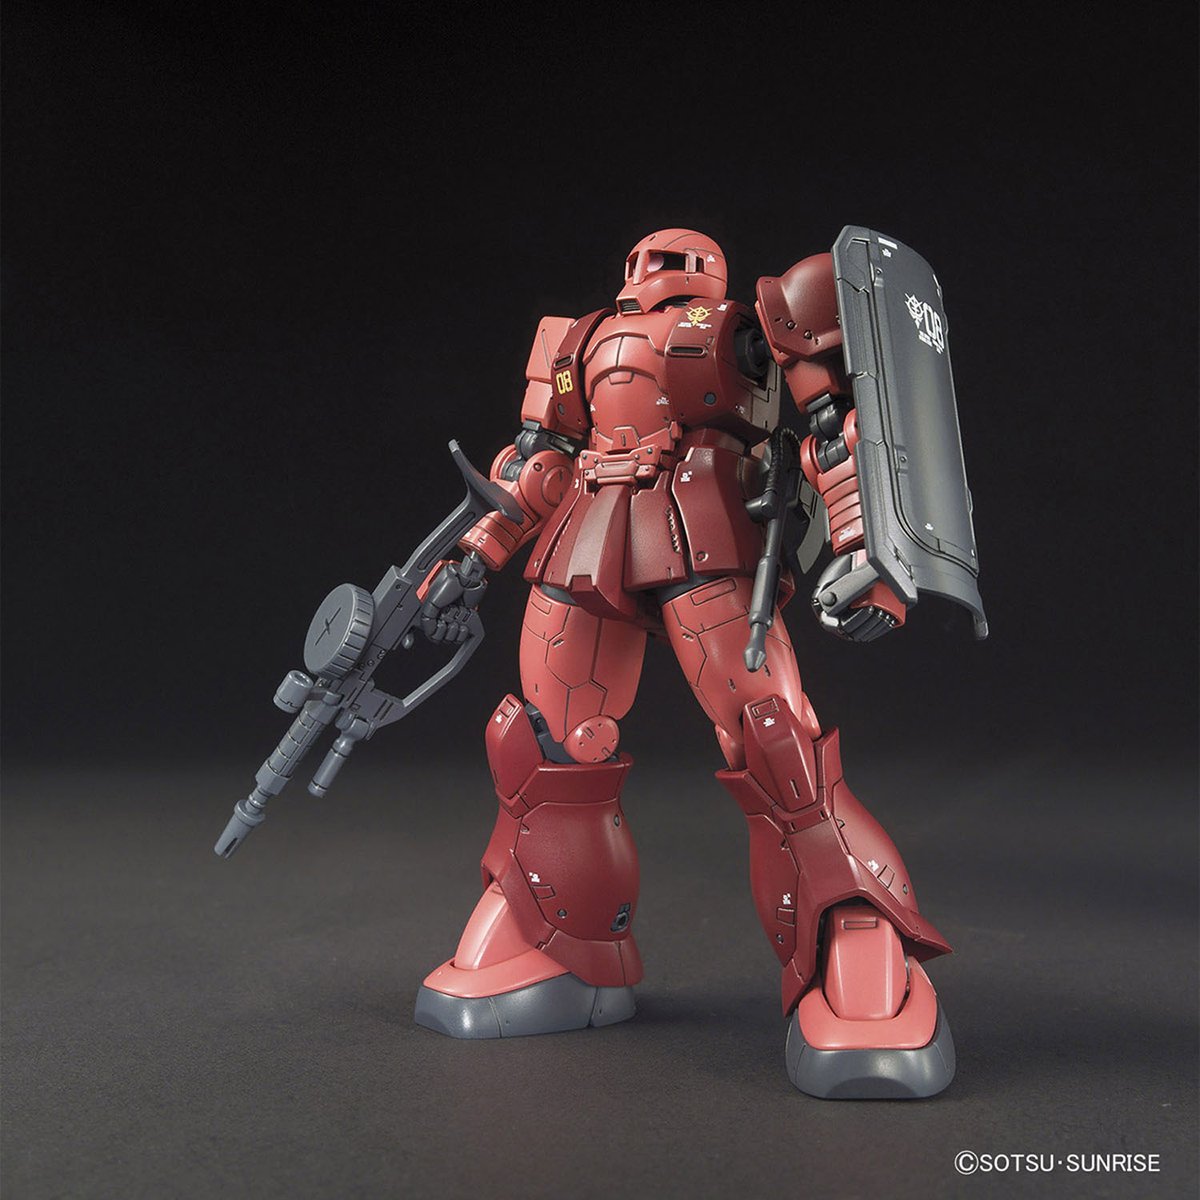 HG 1/144 MS-05 Char's Zaku I [Gundam The Origin ver.] - Release Info